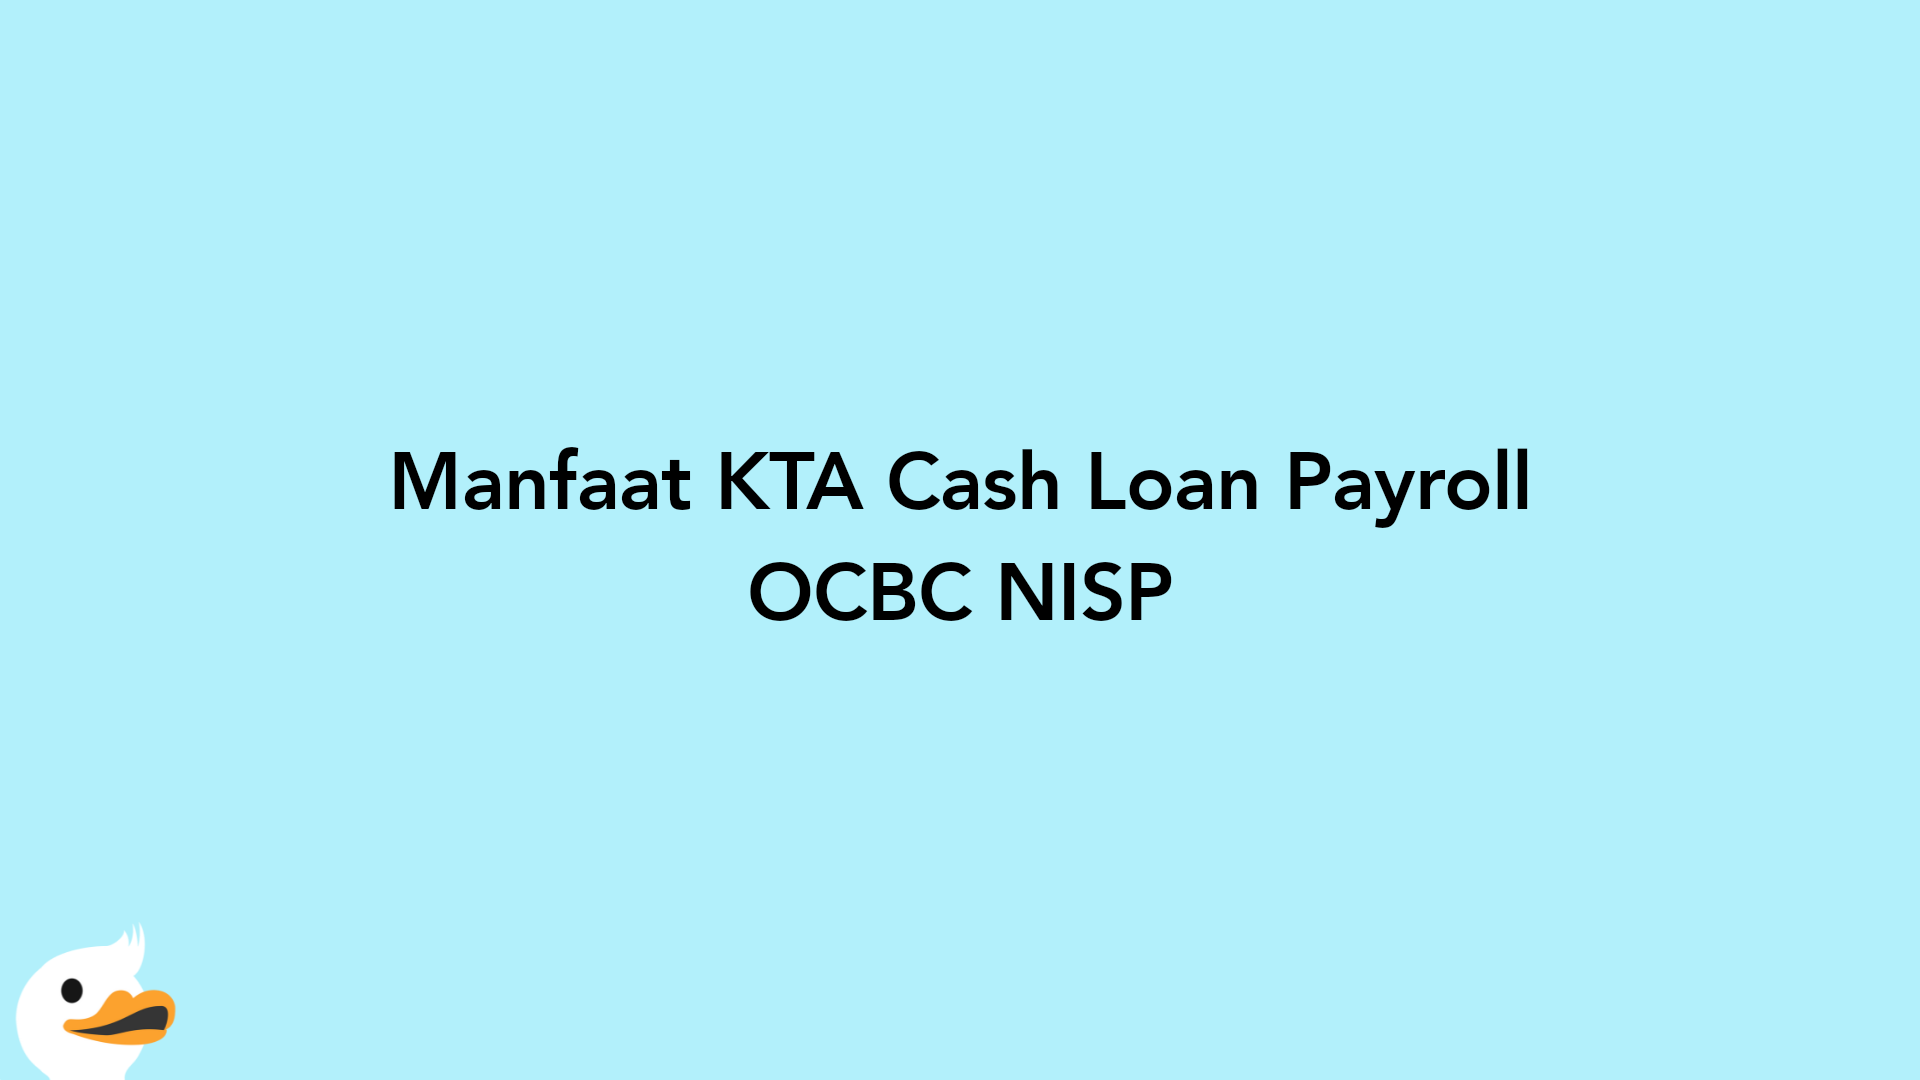 Manfaat KTA Cash Loan Payroll OCBC NISP